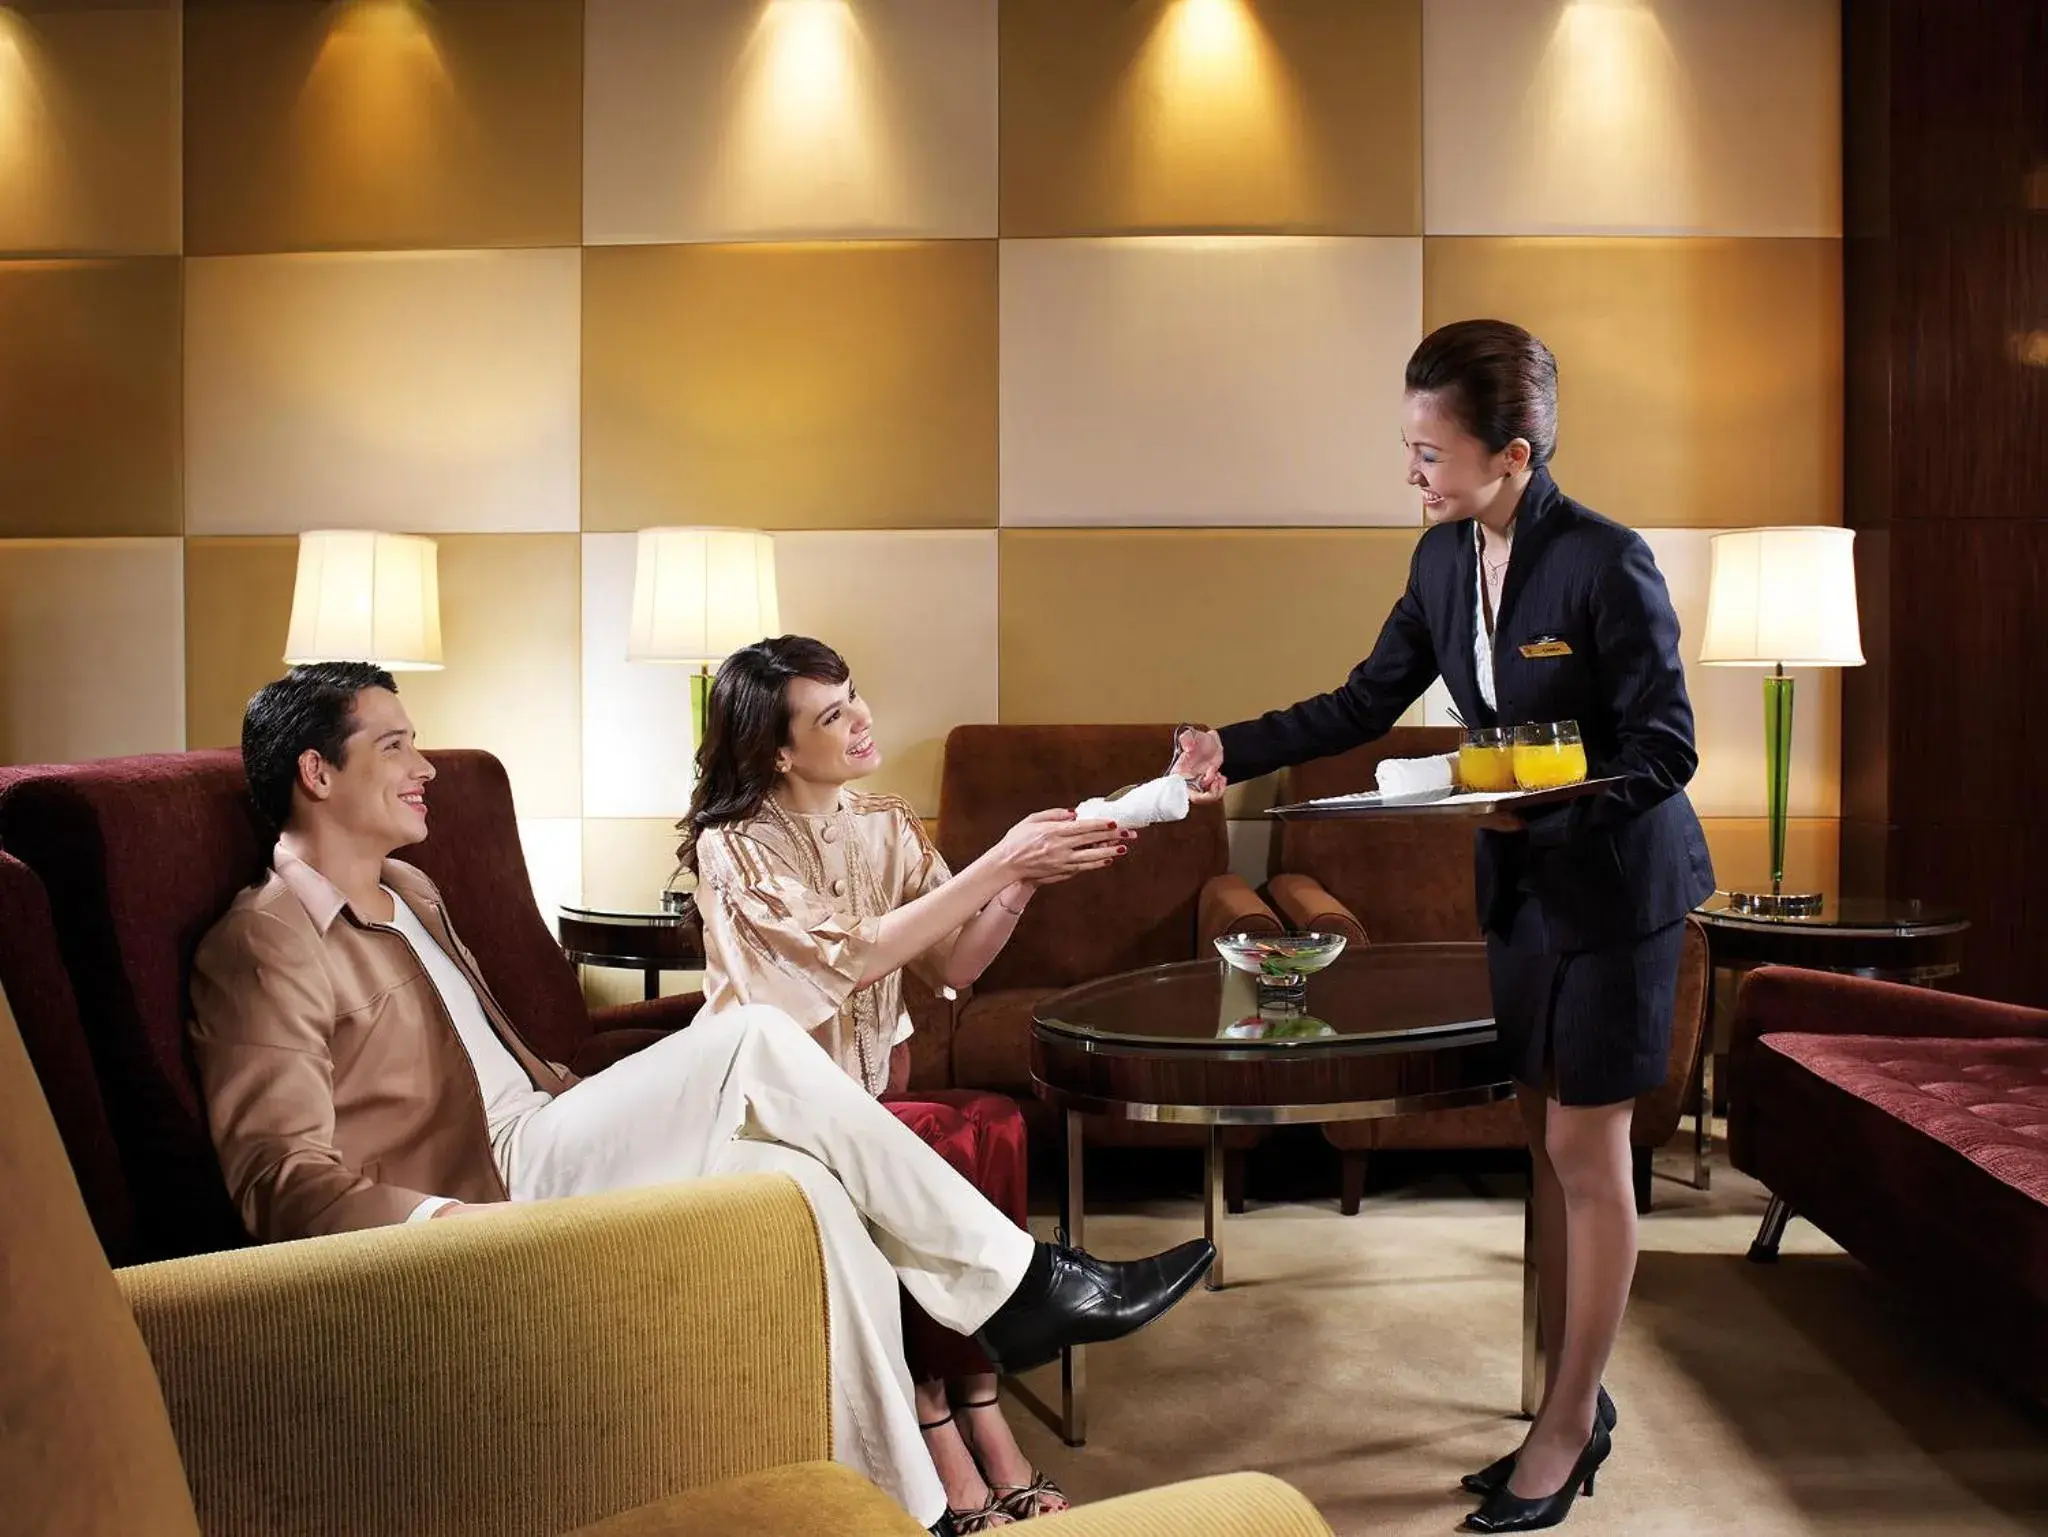 Staff in Resorts World Genting ¿ Highlands Hotel